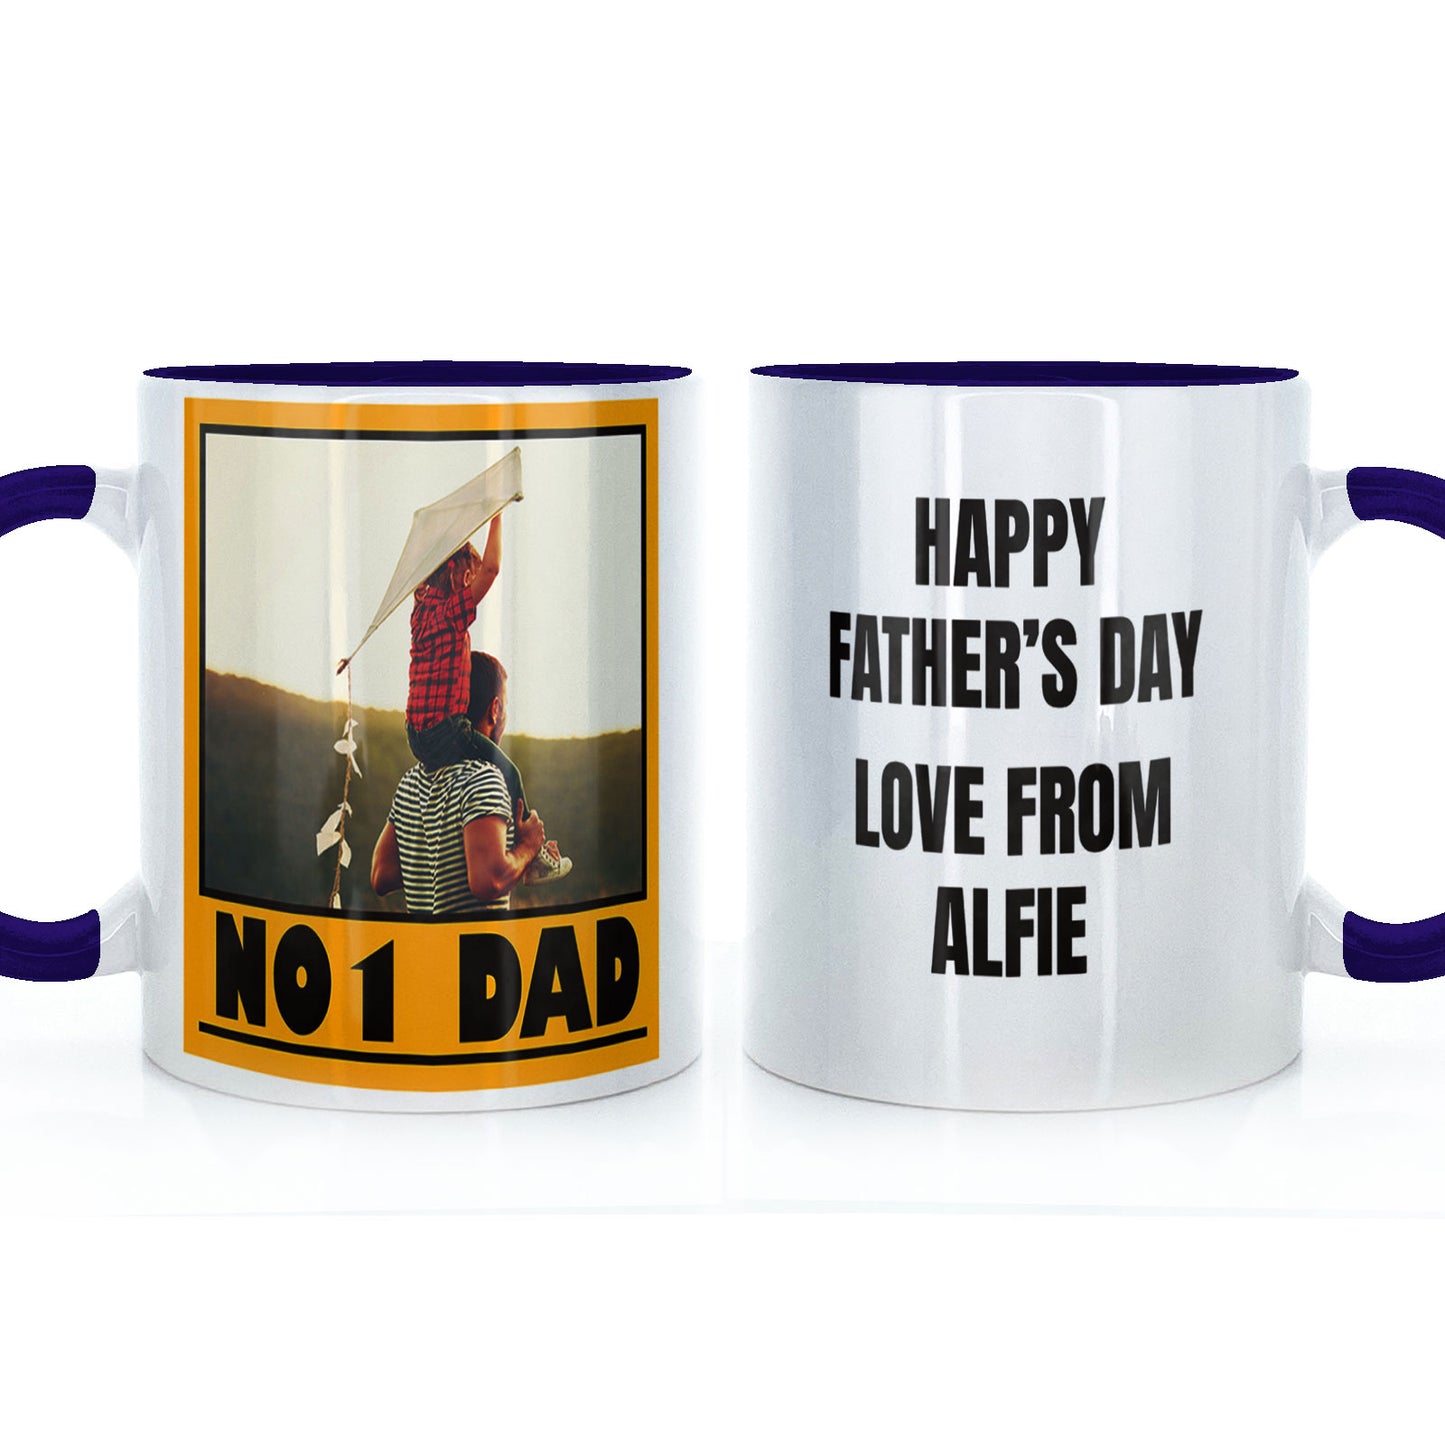 Personalised Father's Day Mug - No1. Dad Photo Upload